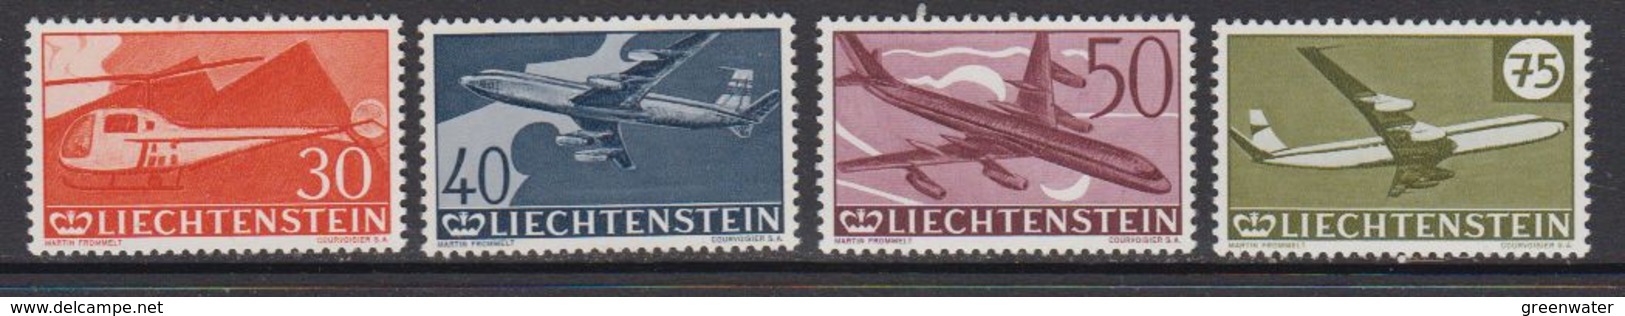 Liechtenstein 1960 Airmail Stamps 4v Mnh (44025) - Luchtpostzegels